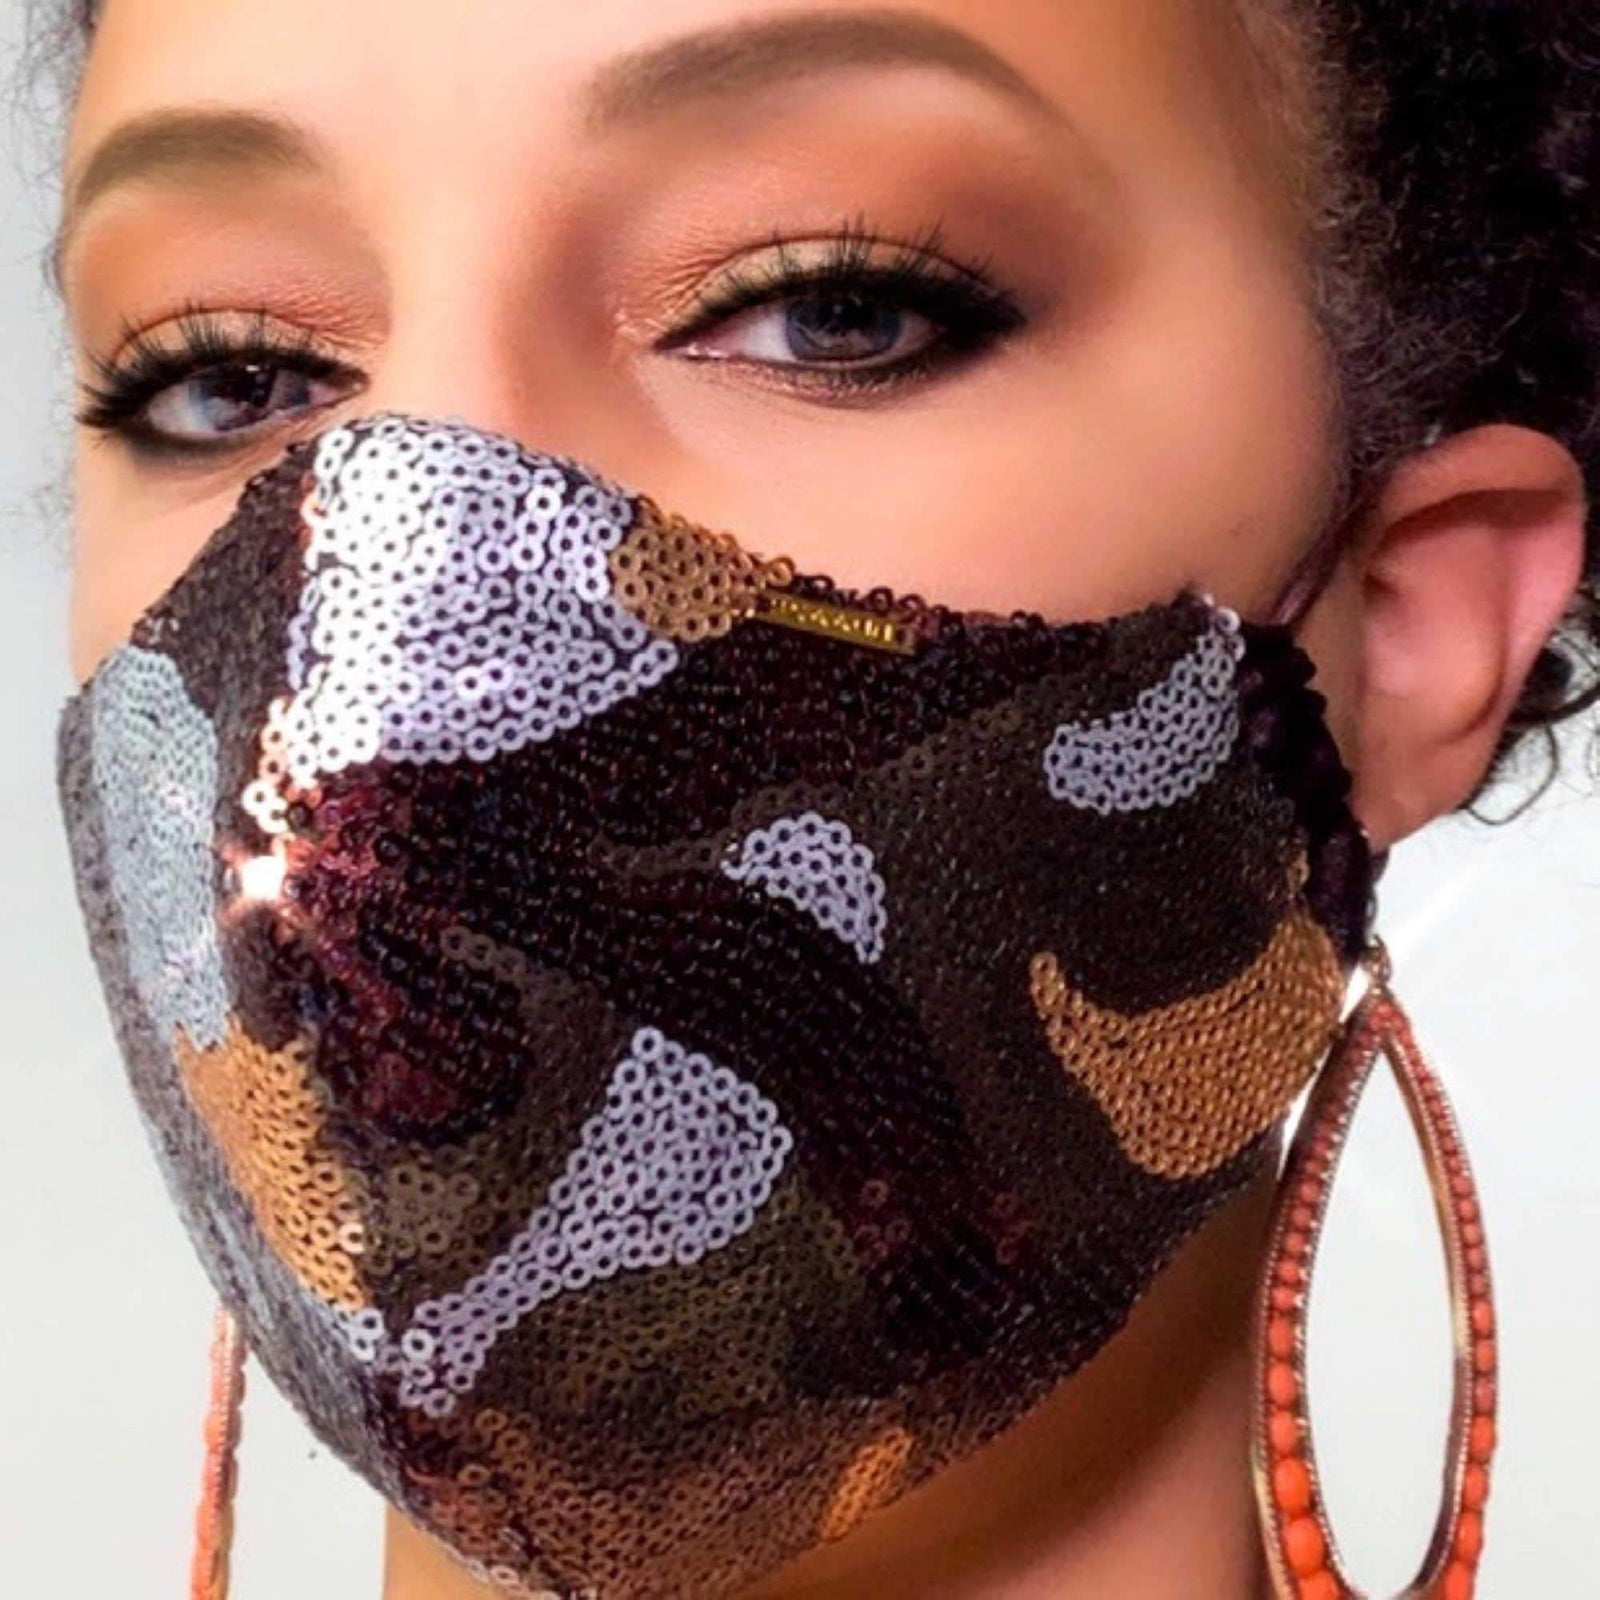 Fashion face mask / mouth cover, big rhinestones, multi-color